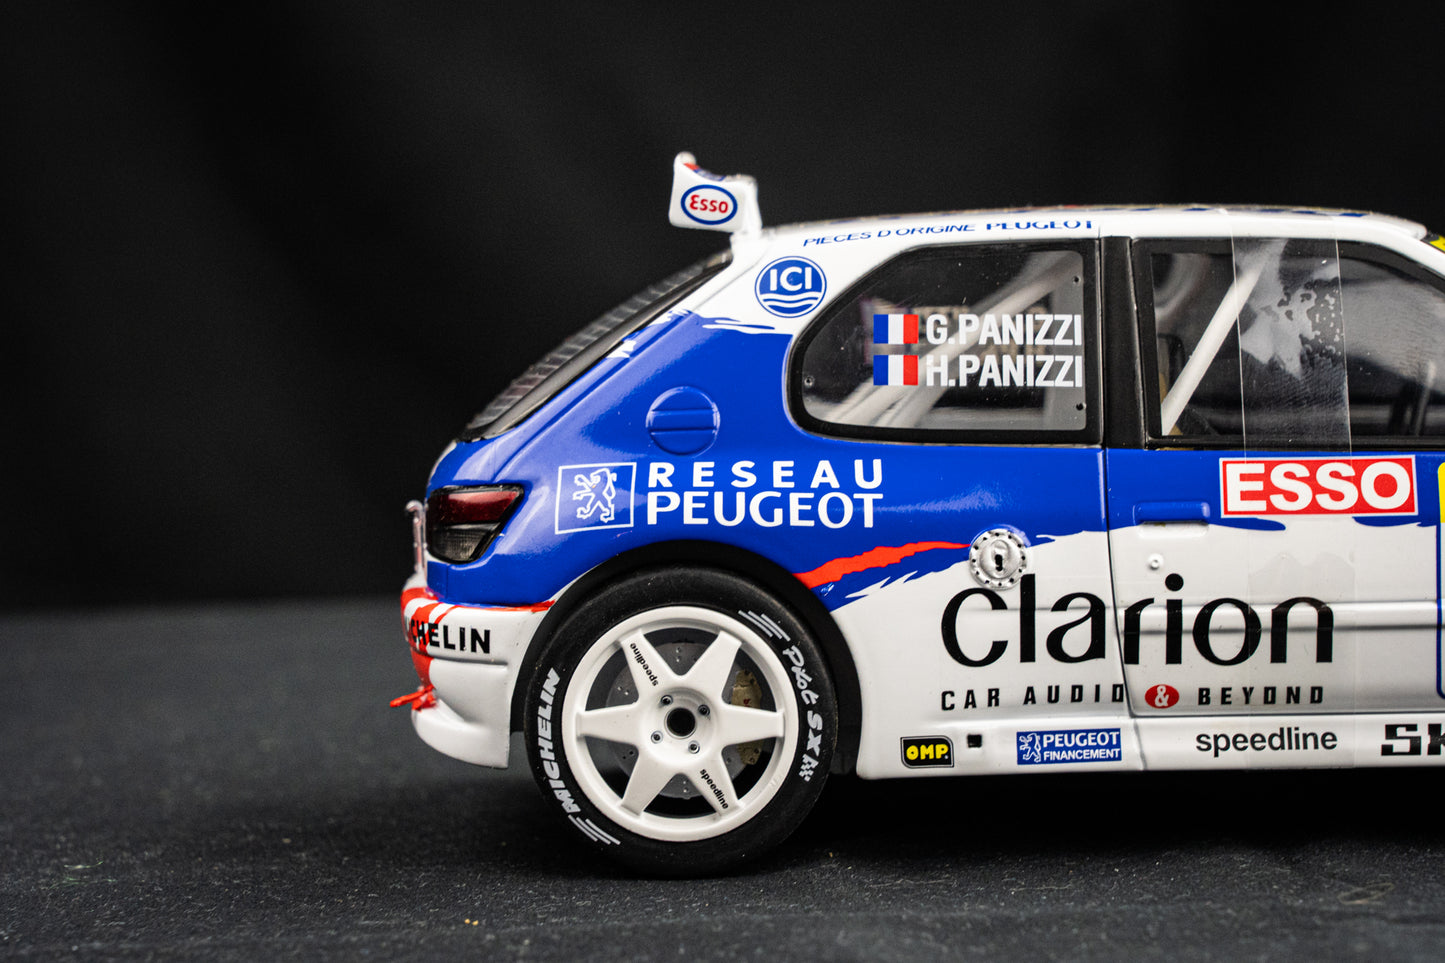 Peugeot 306 Maxi #16 G. Panizzi / H. Panizzi - Rallye Monte Carlo 1998 - Solido 1:18